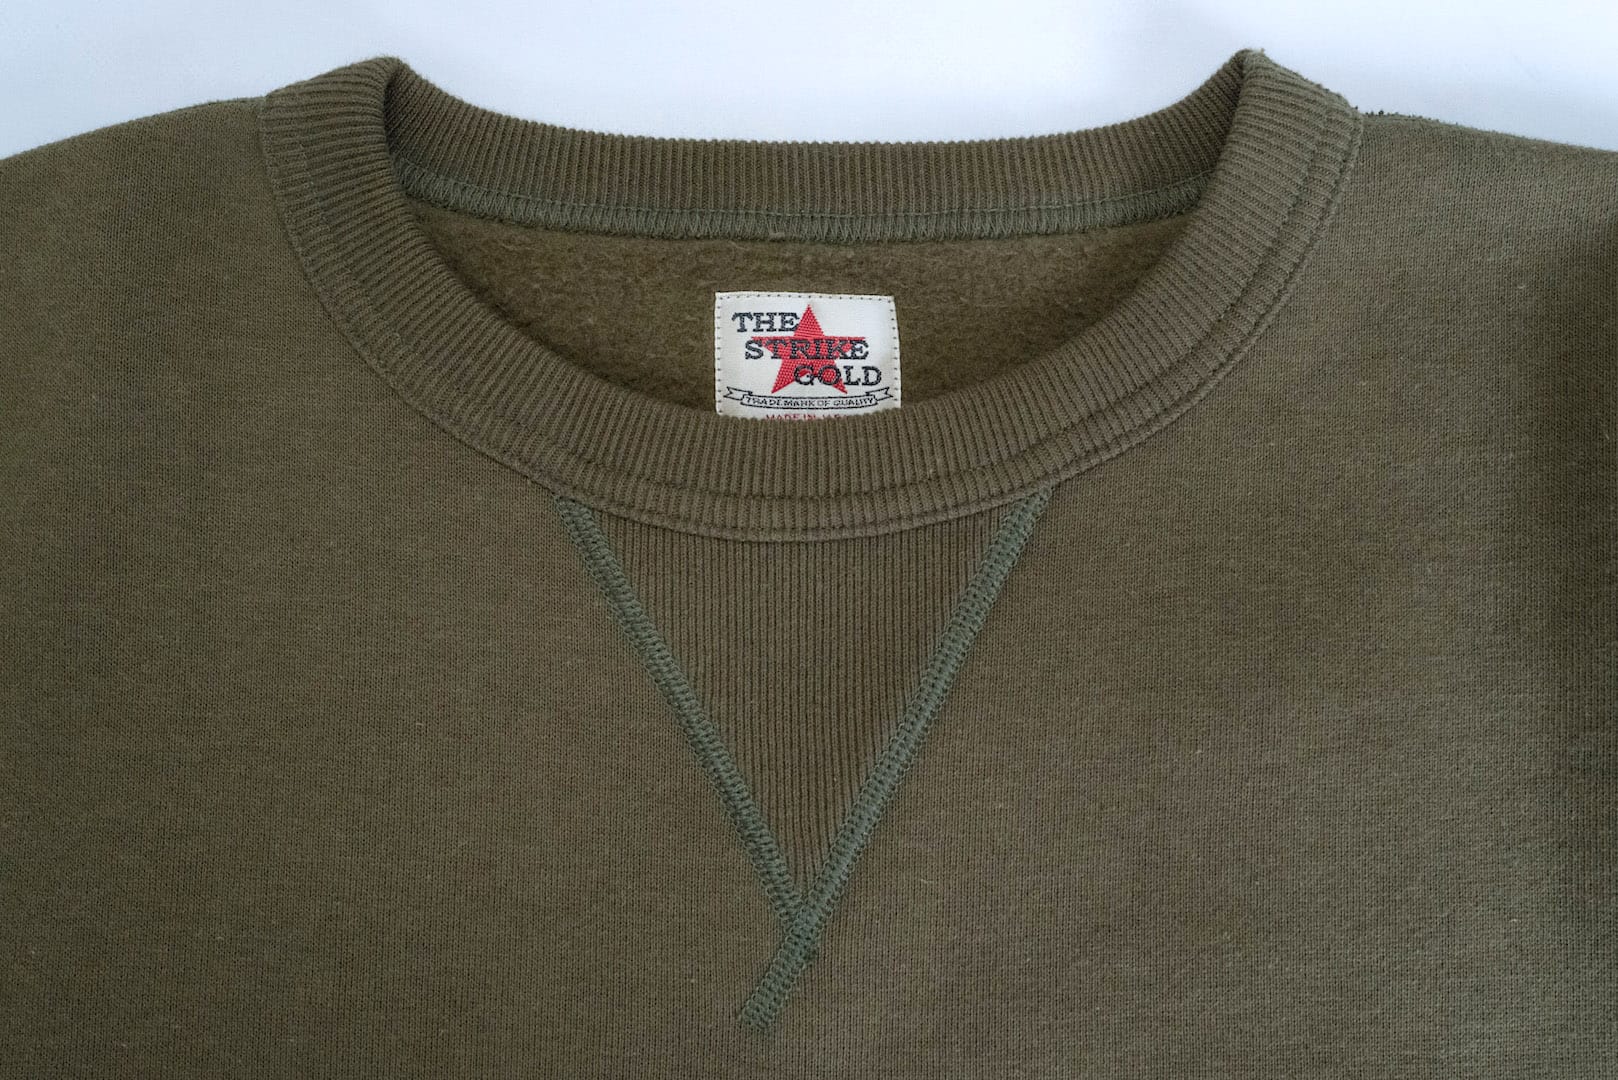 The Strike Gold X CORLECTION 12oz Loopwheeled Sweatshirt (Vintage Olive)